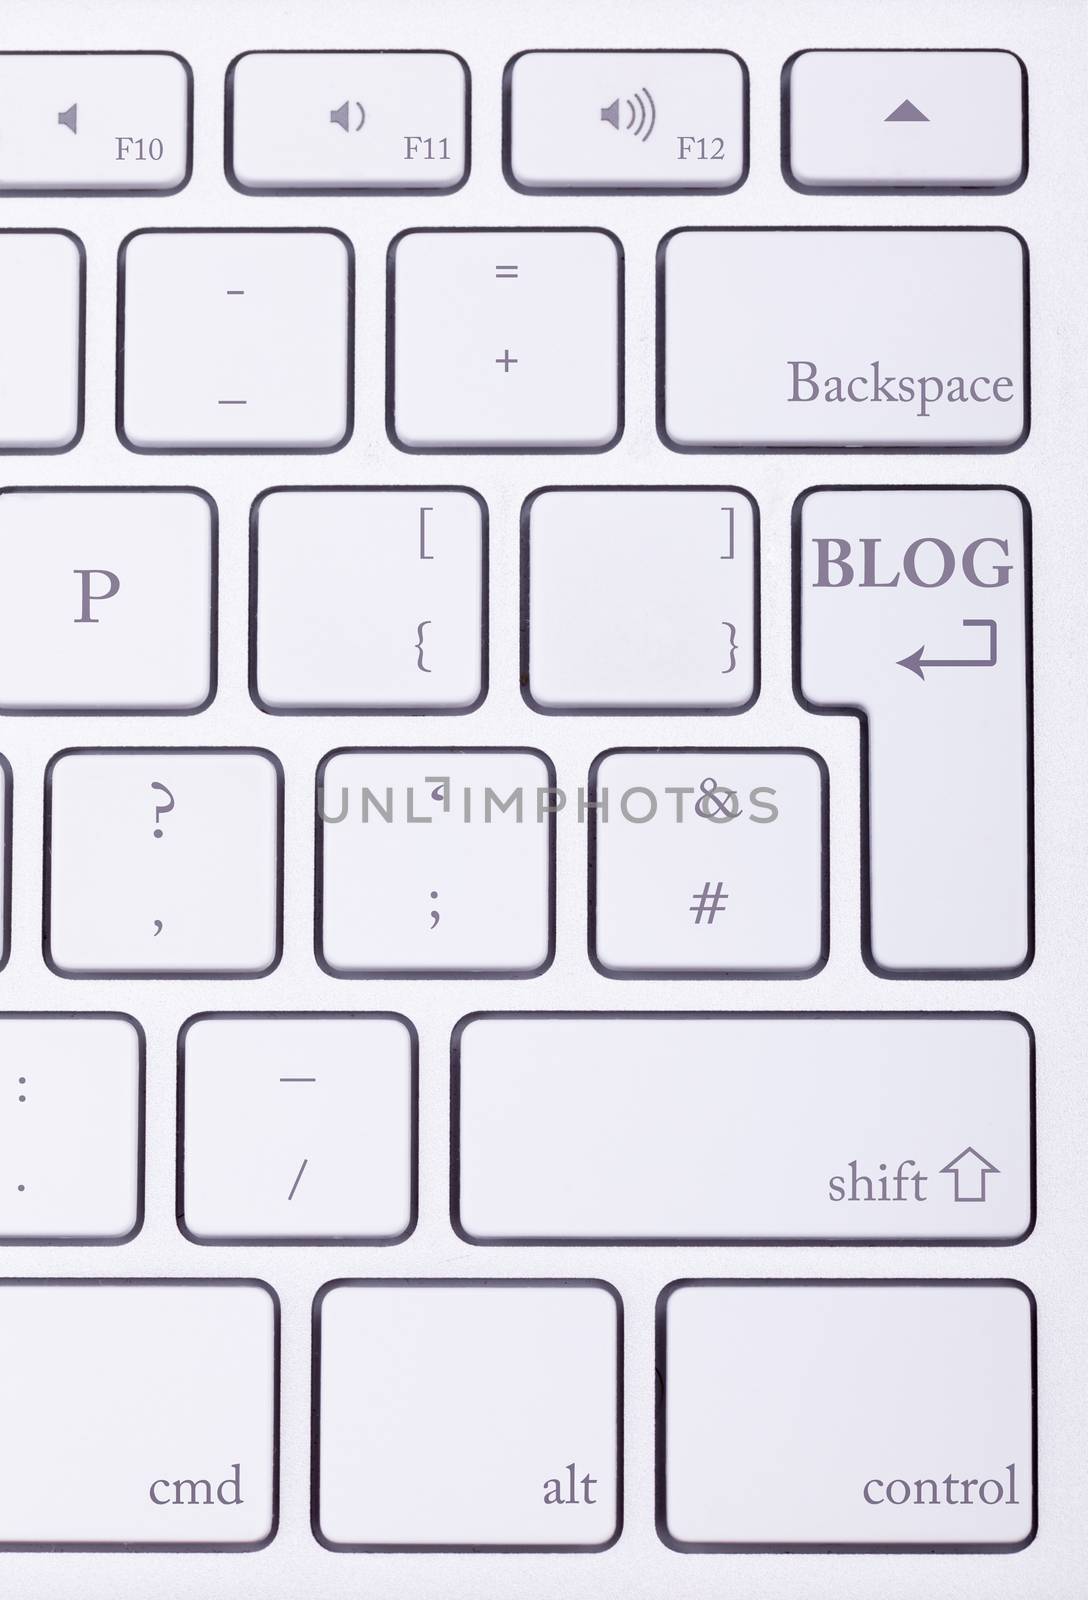 Blog word written on standard keyboard. Blogging and writing